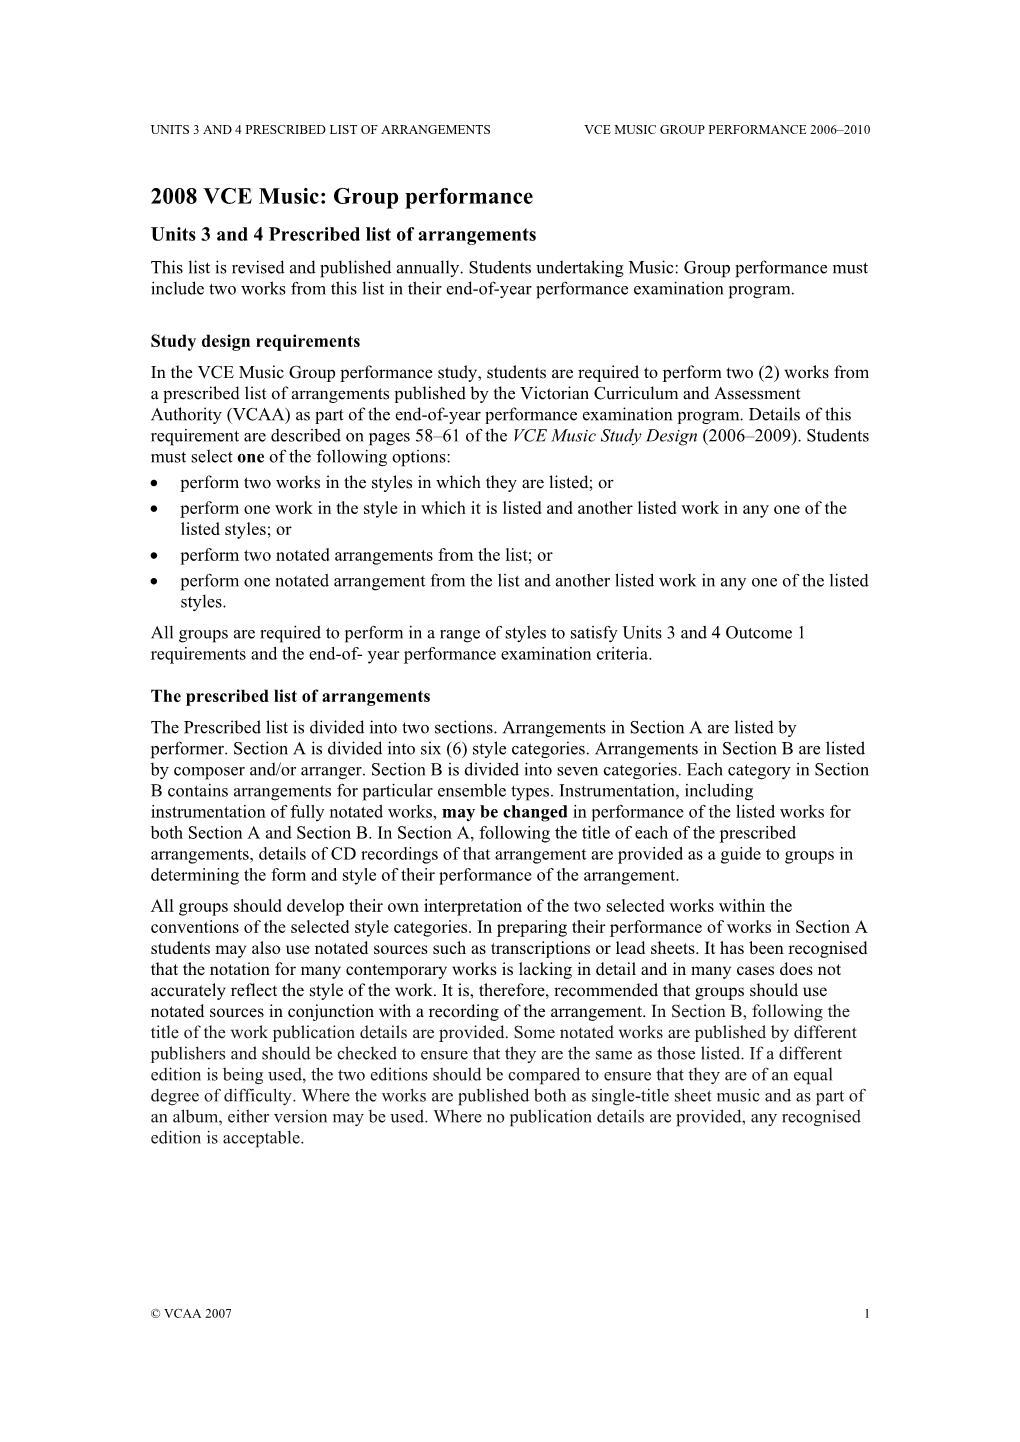 VCE Music Group Performance Prescribed List of Arrangements 2008